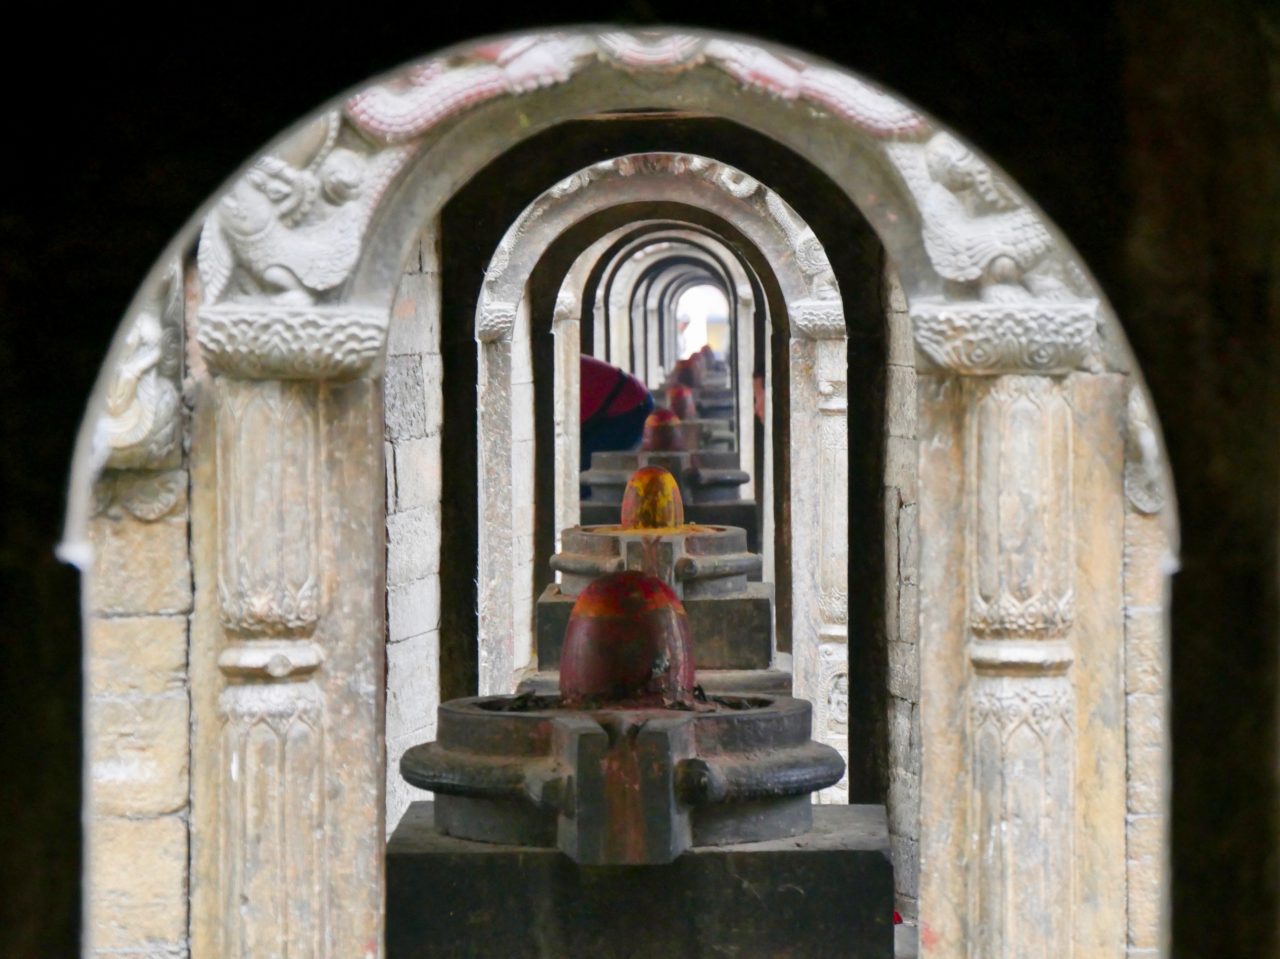 Hindu Tempel Pashupatinath, Kathmandu, Nepal